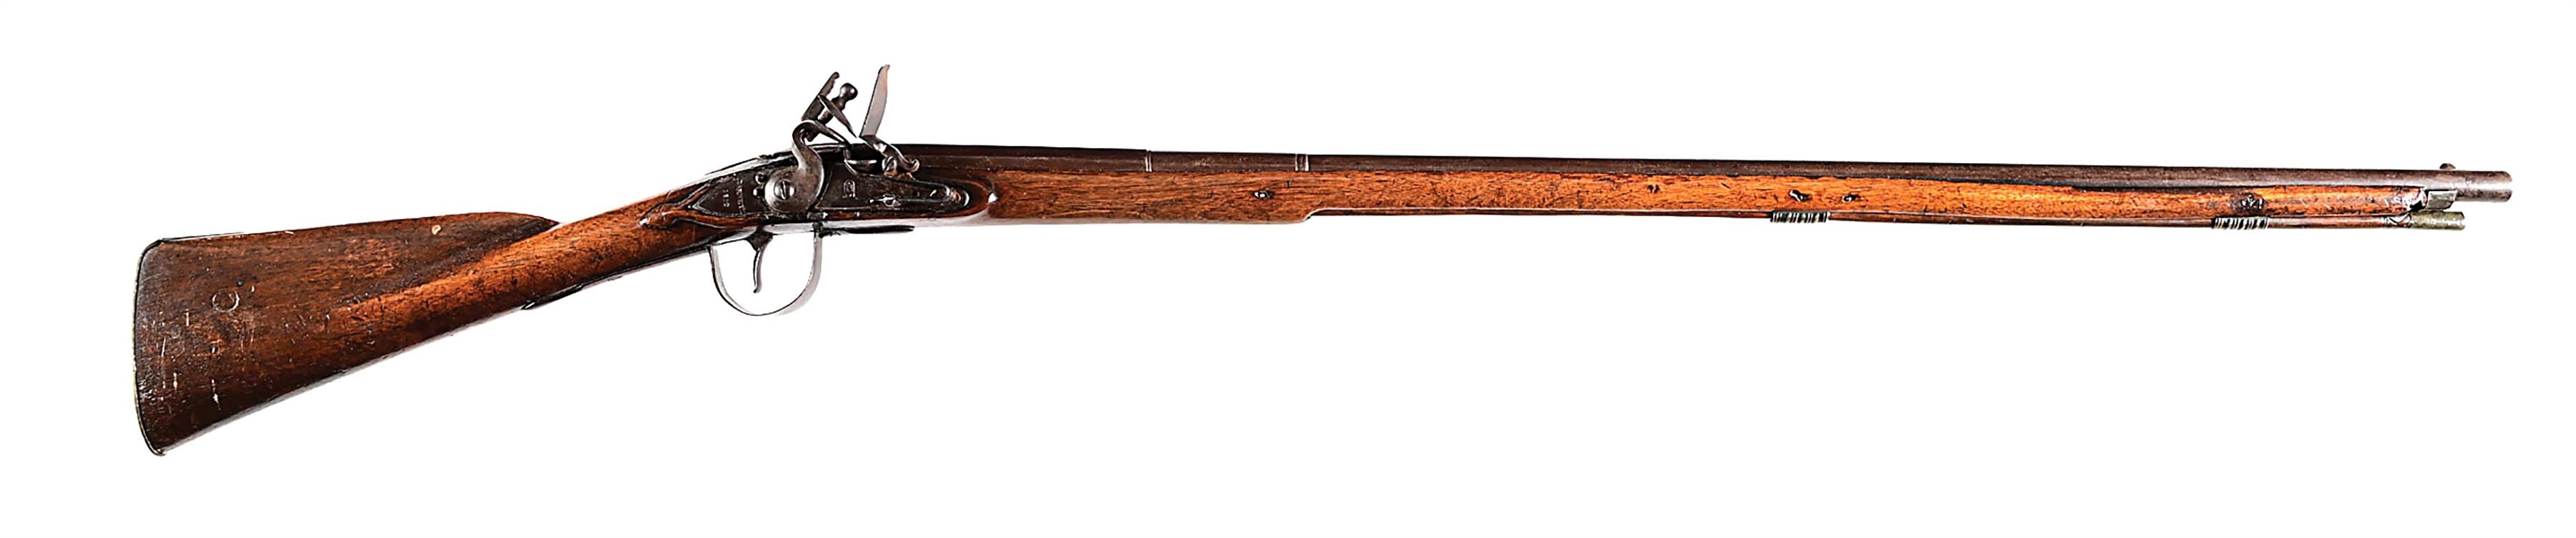 1812 DATED FLINTLOCK TRADE GUN BY BARNETT